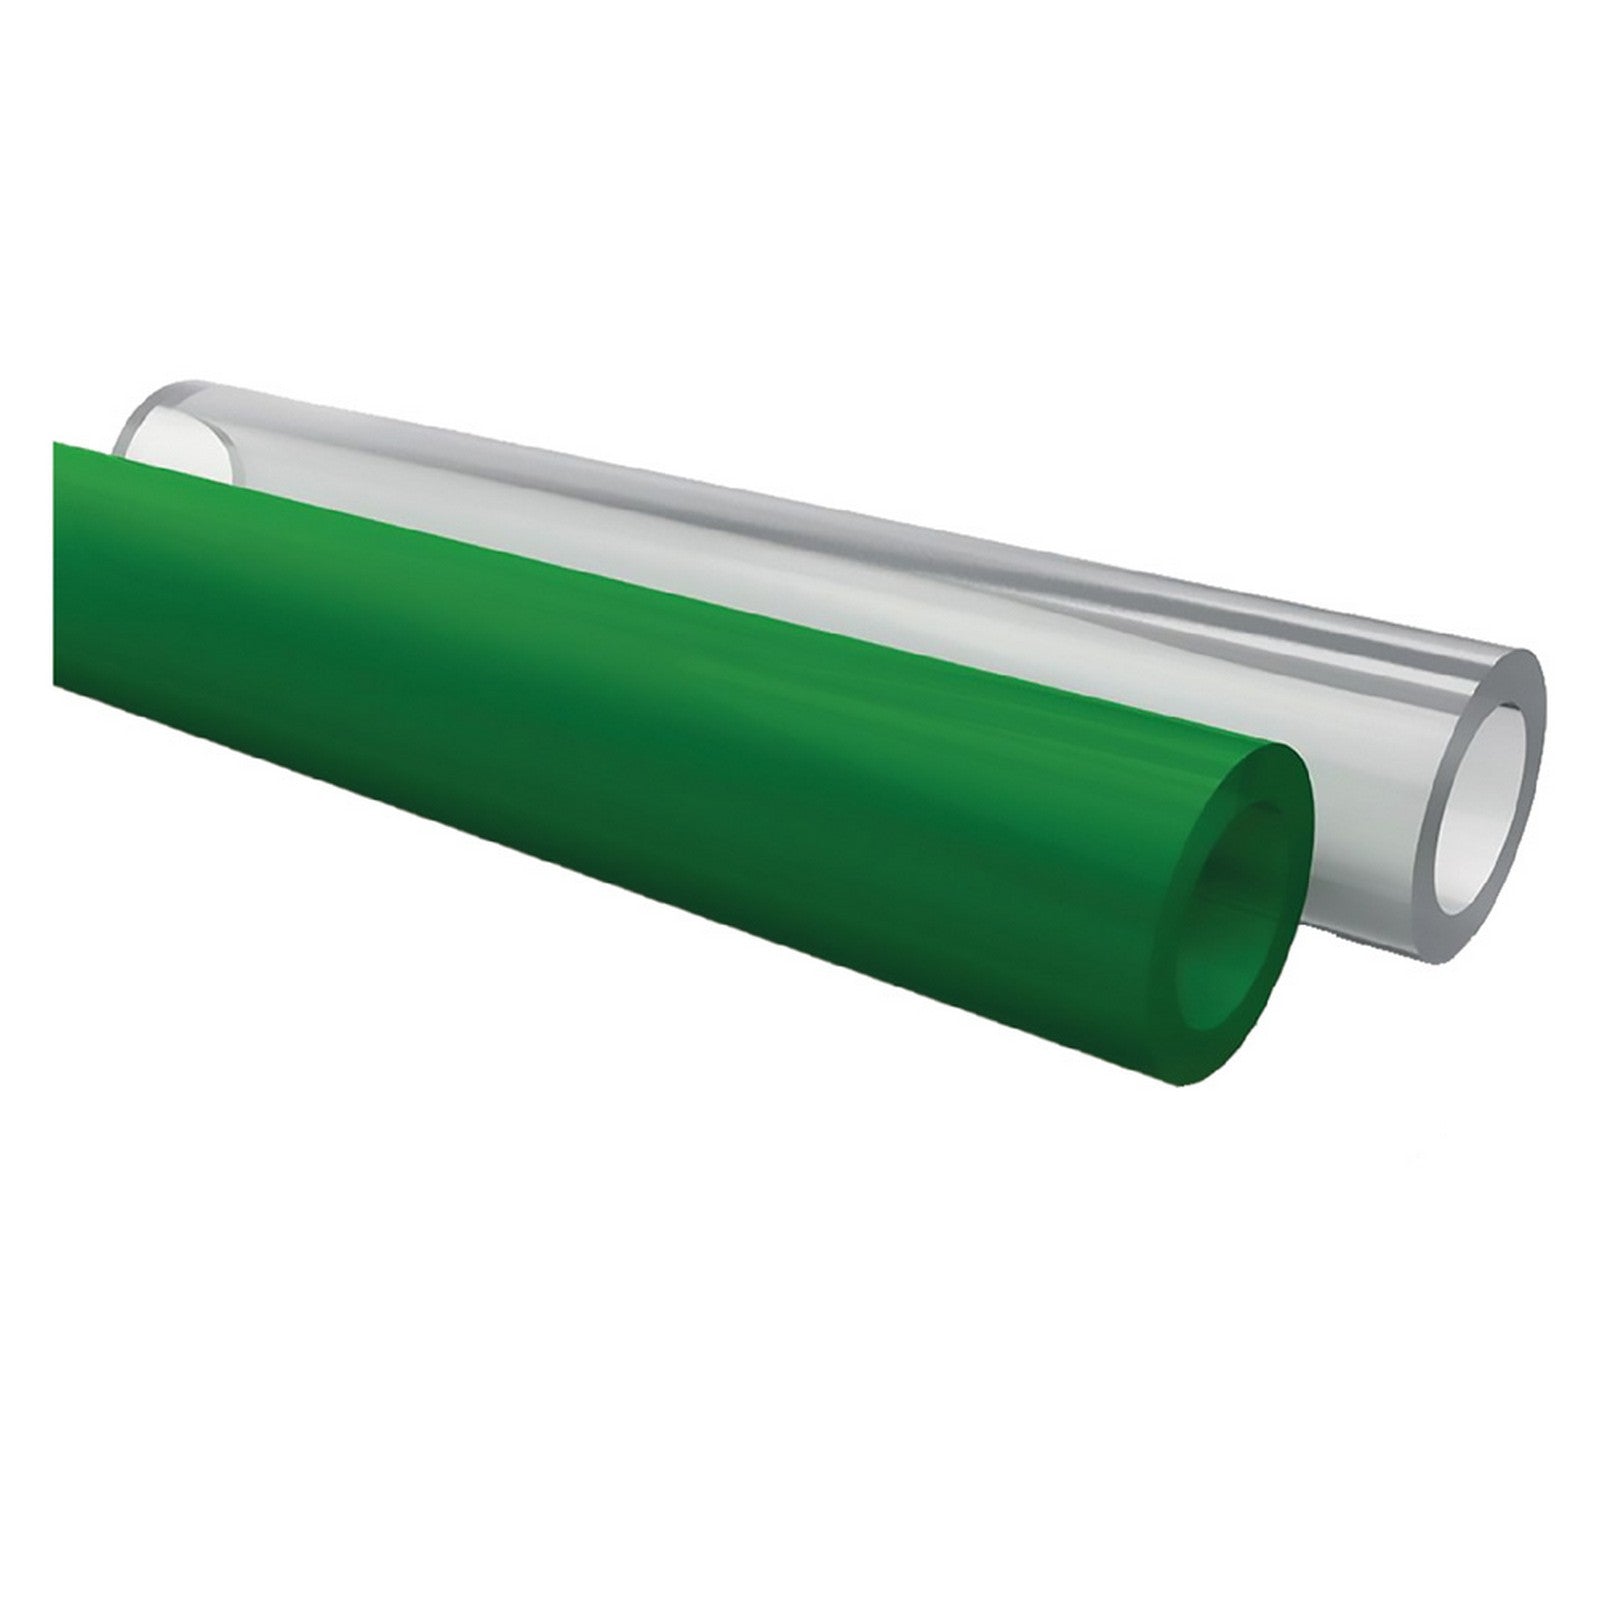 30kg tubo antigelo mm 18 x 24 (3/4) verde cod:ferx.6122216nlm